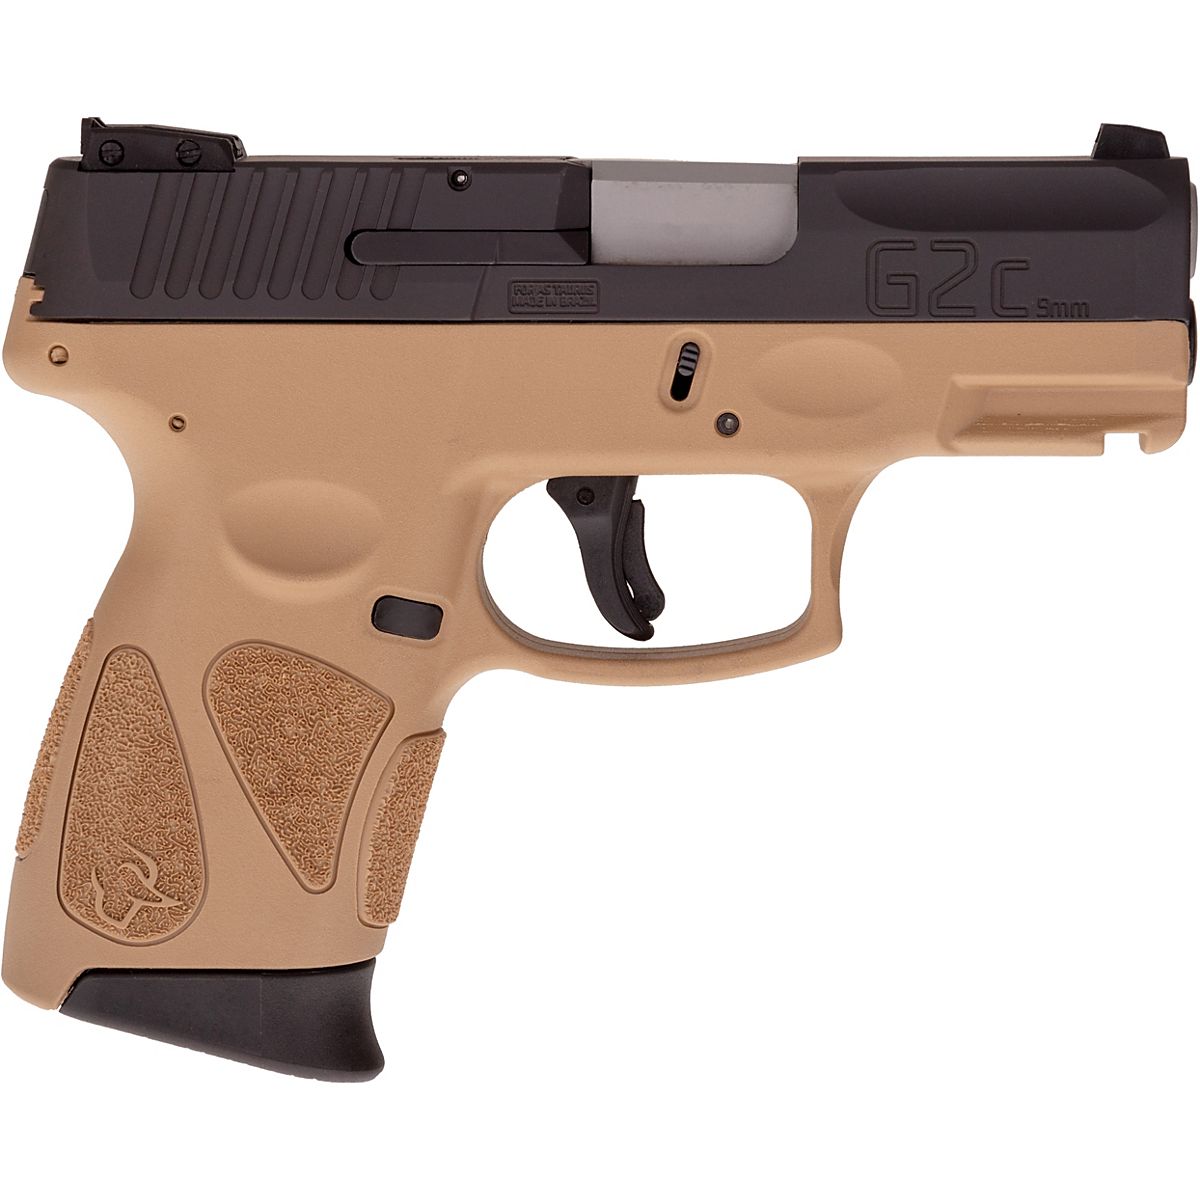 Taurus G2c Fde 9mm Pistol Academy 0236